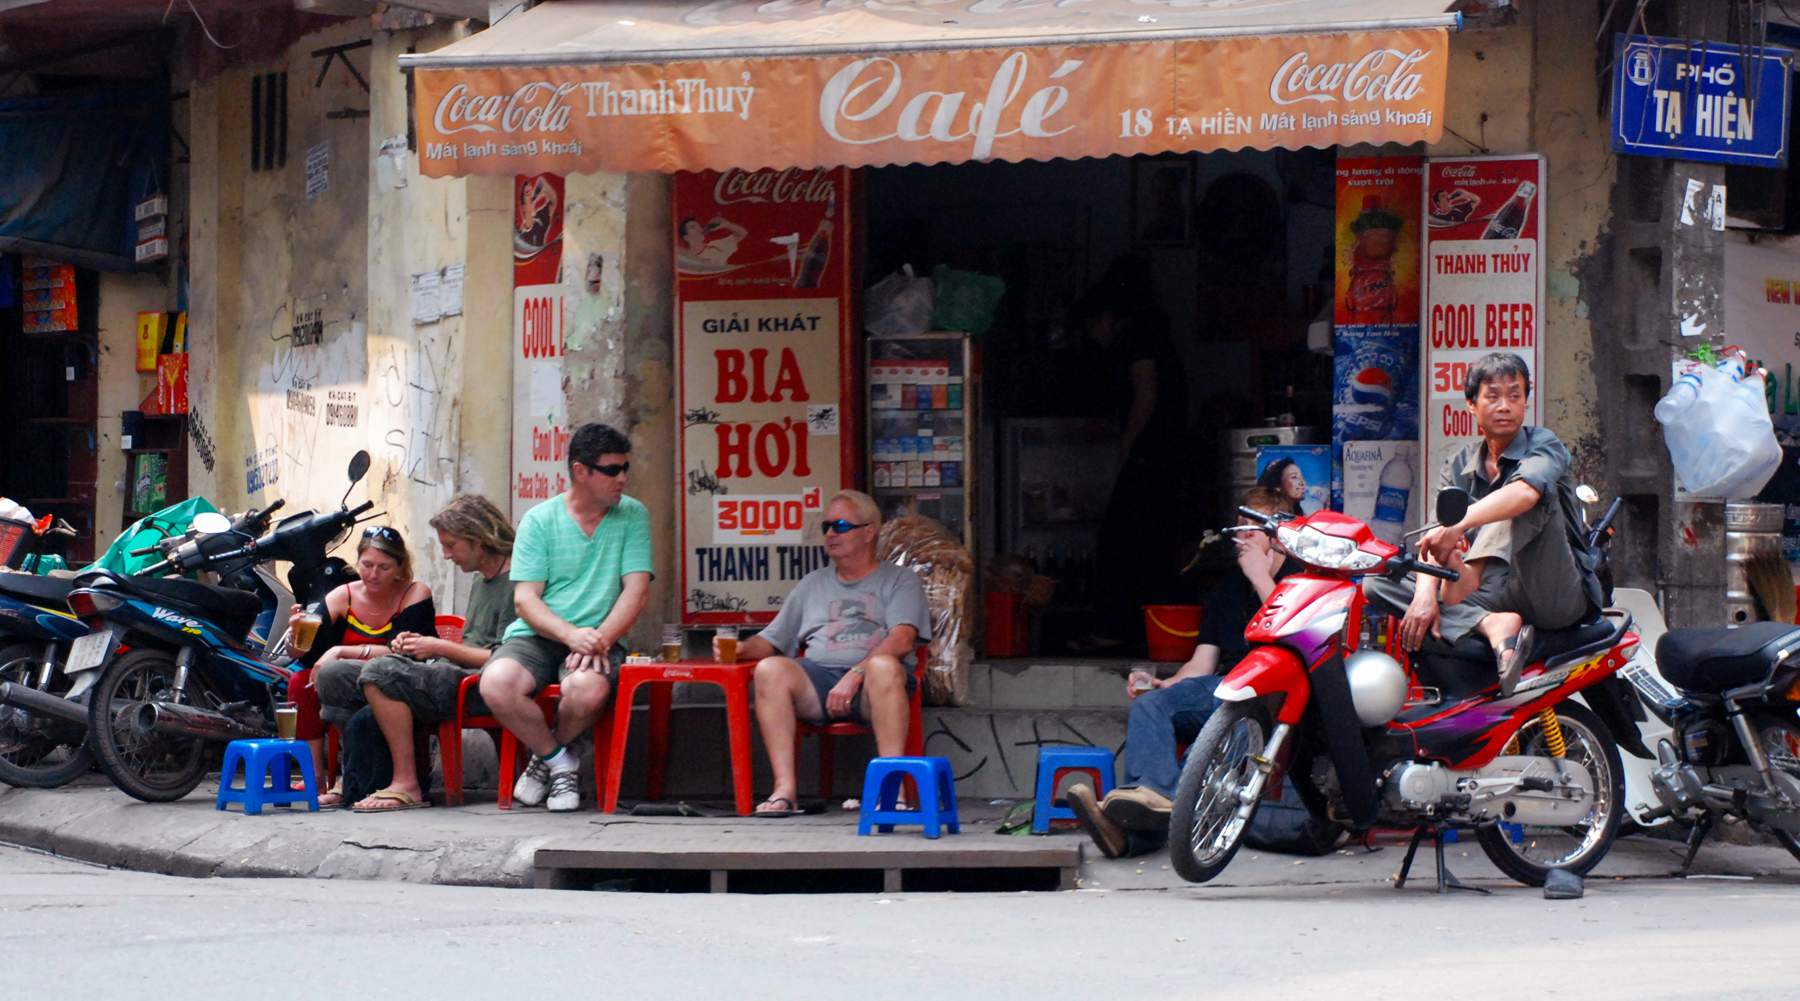 Bia Hoi bier in Vietnam